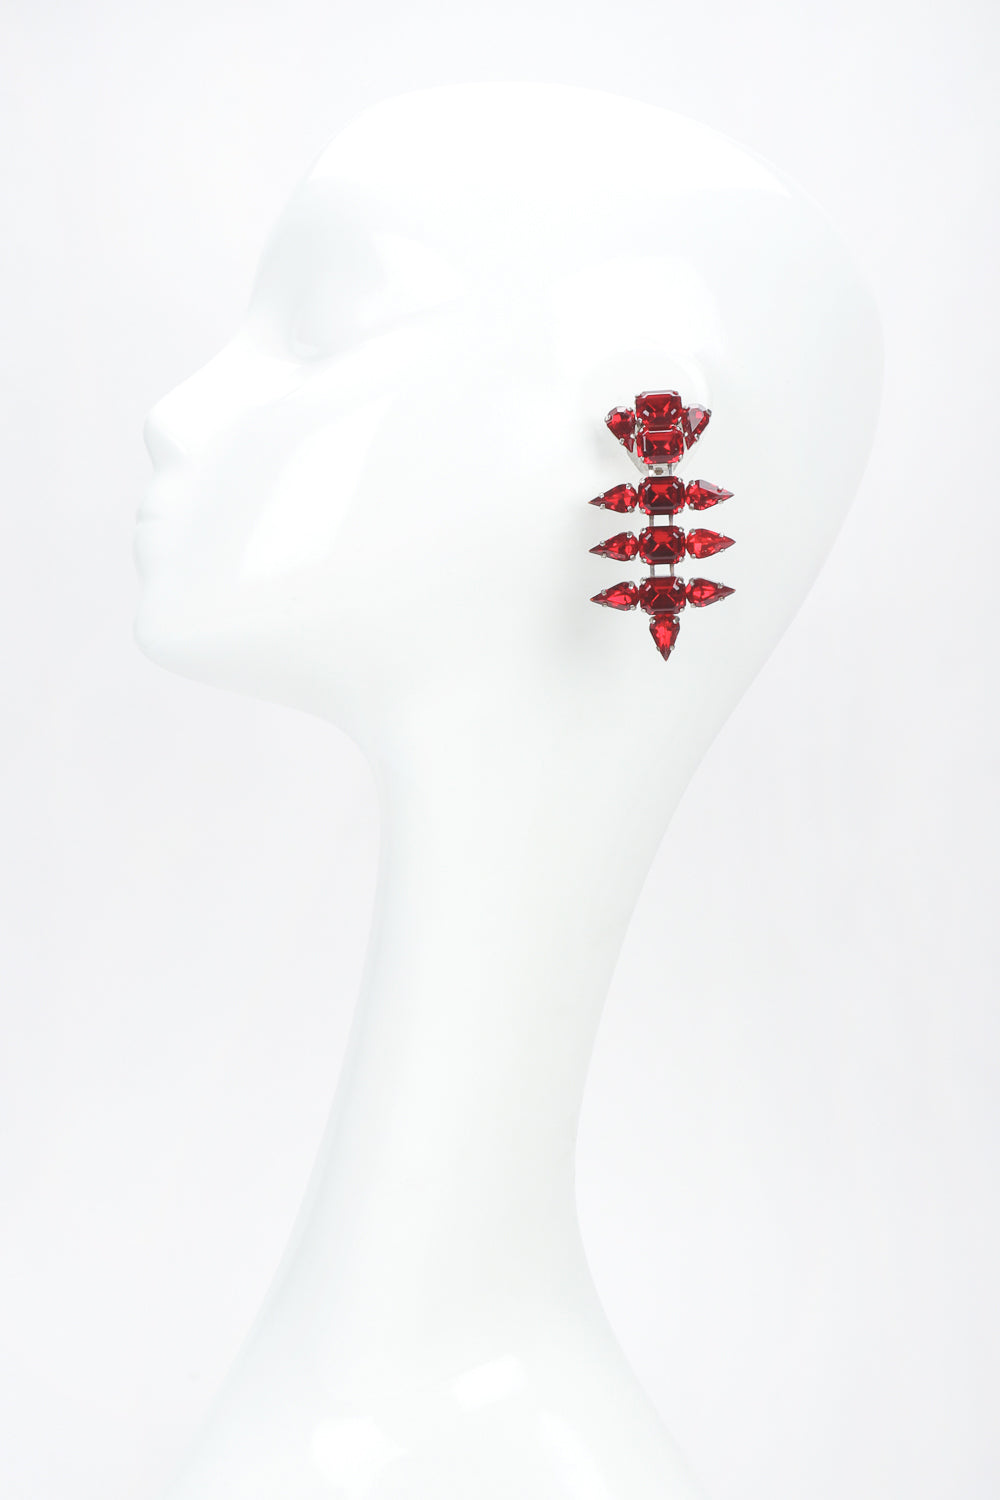 Recess Designer Consignment Vintage Ruby Rhinestone Crystal Pointed Spike Tear Drop Earrings Los Angeles Resale